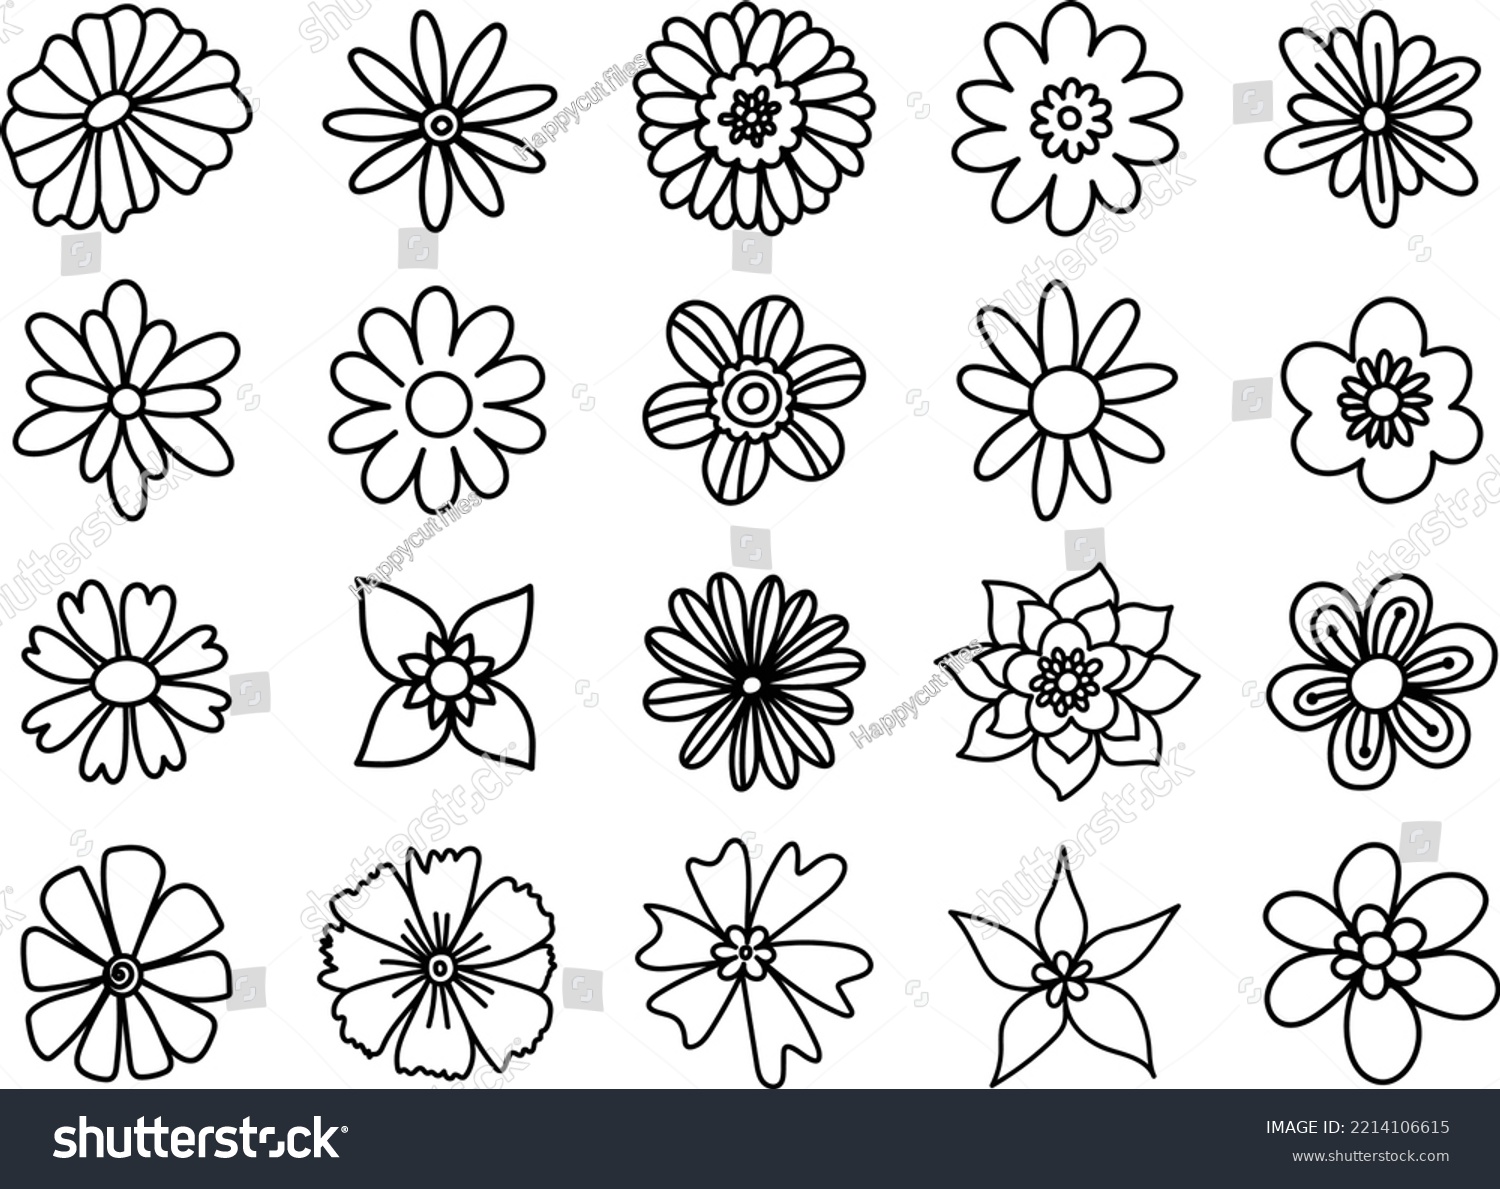 SVG of Handdrawn Flower Floral Clipart Vector Files svg